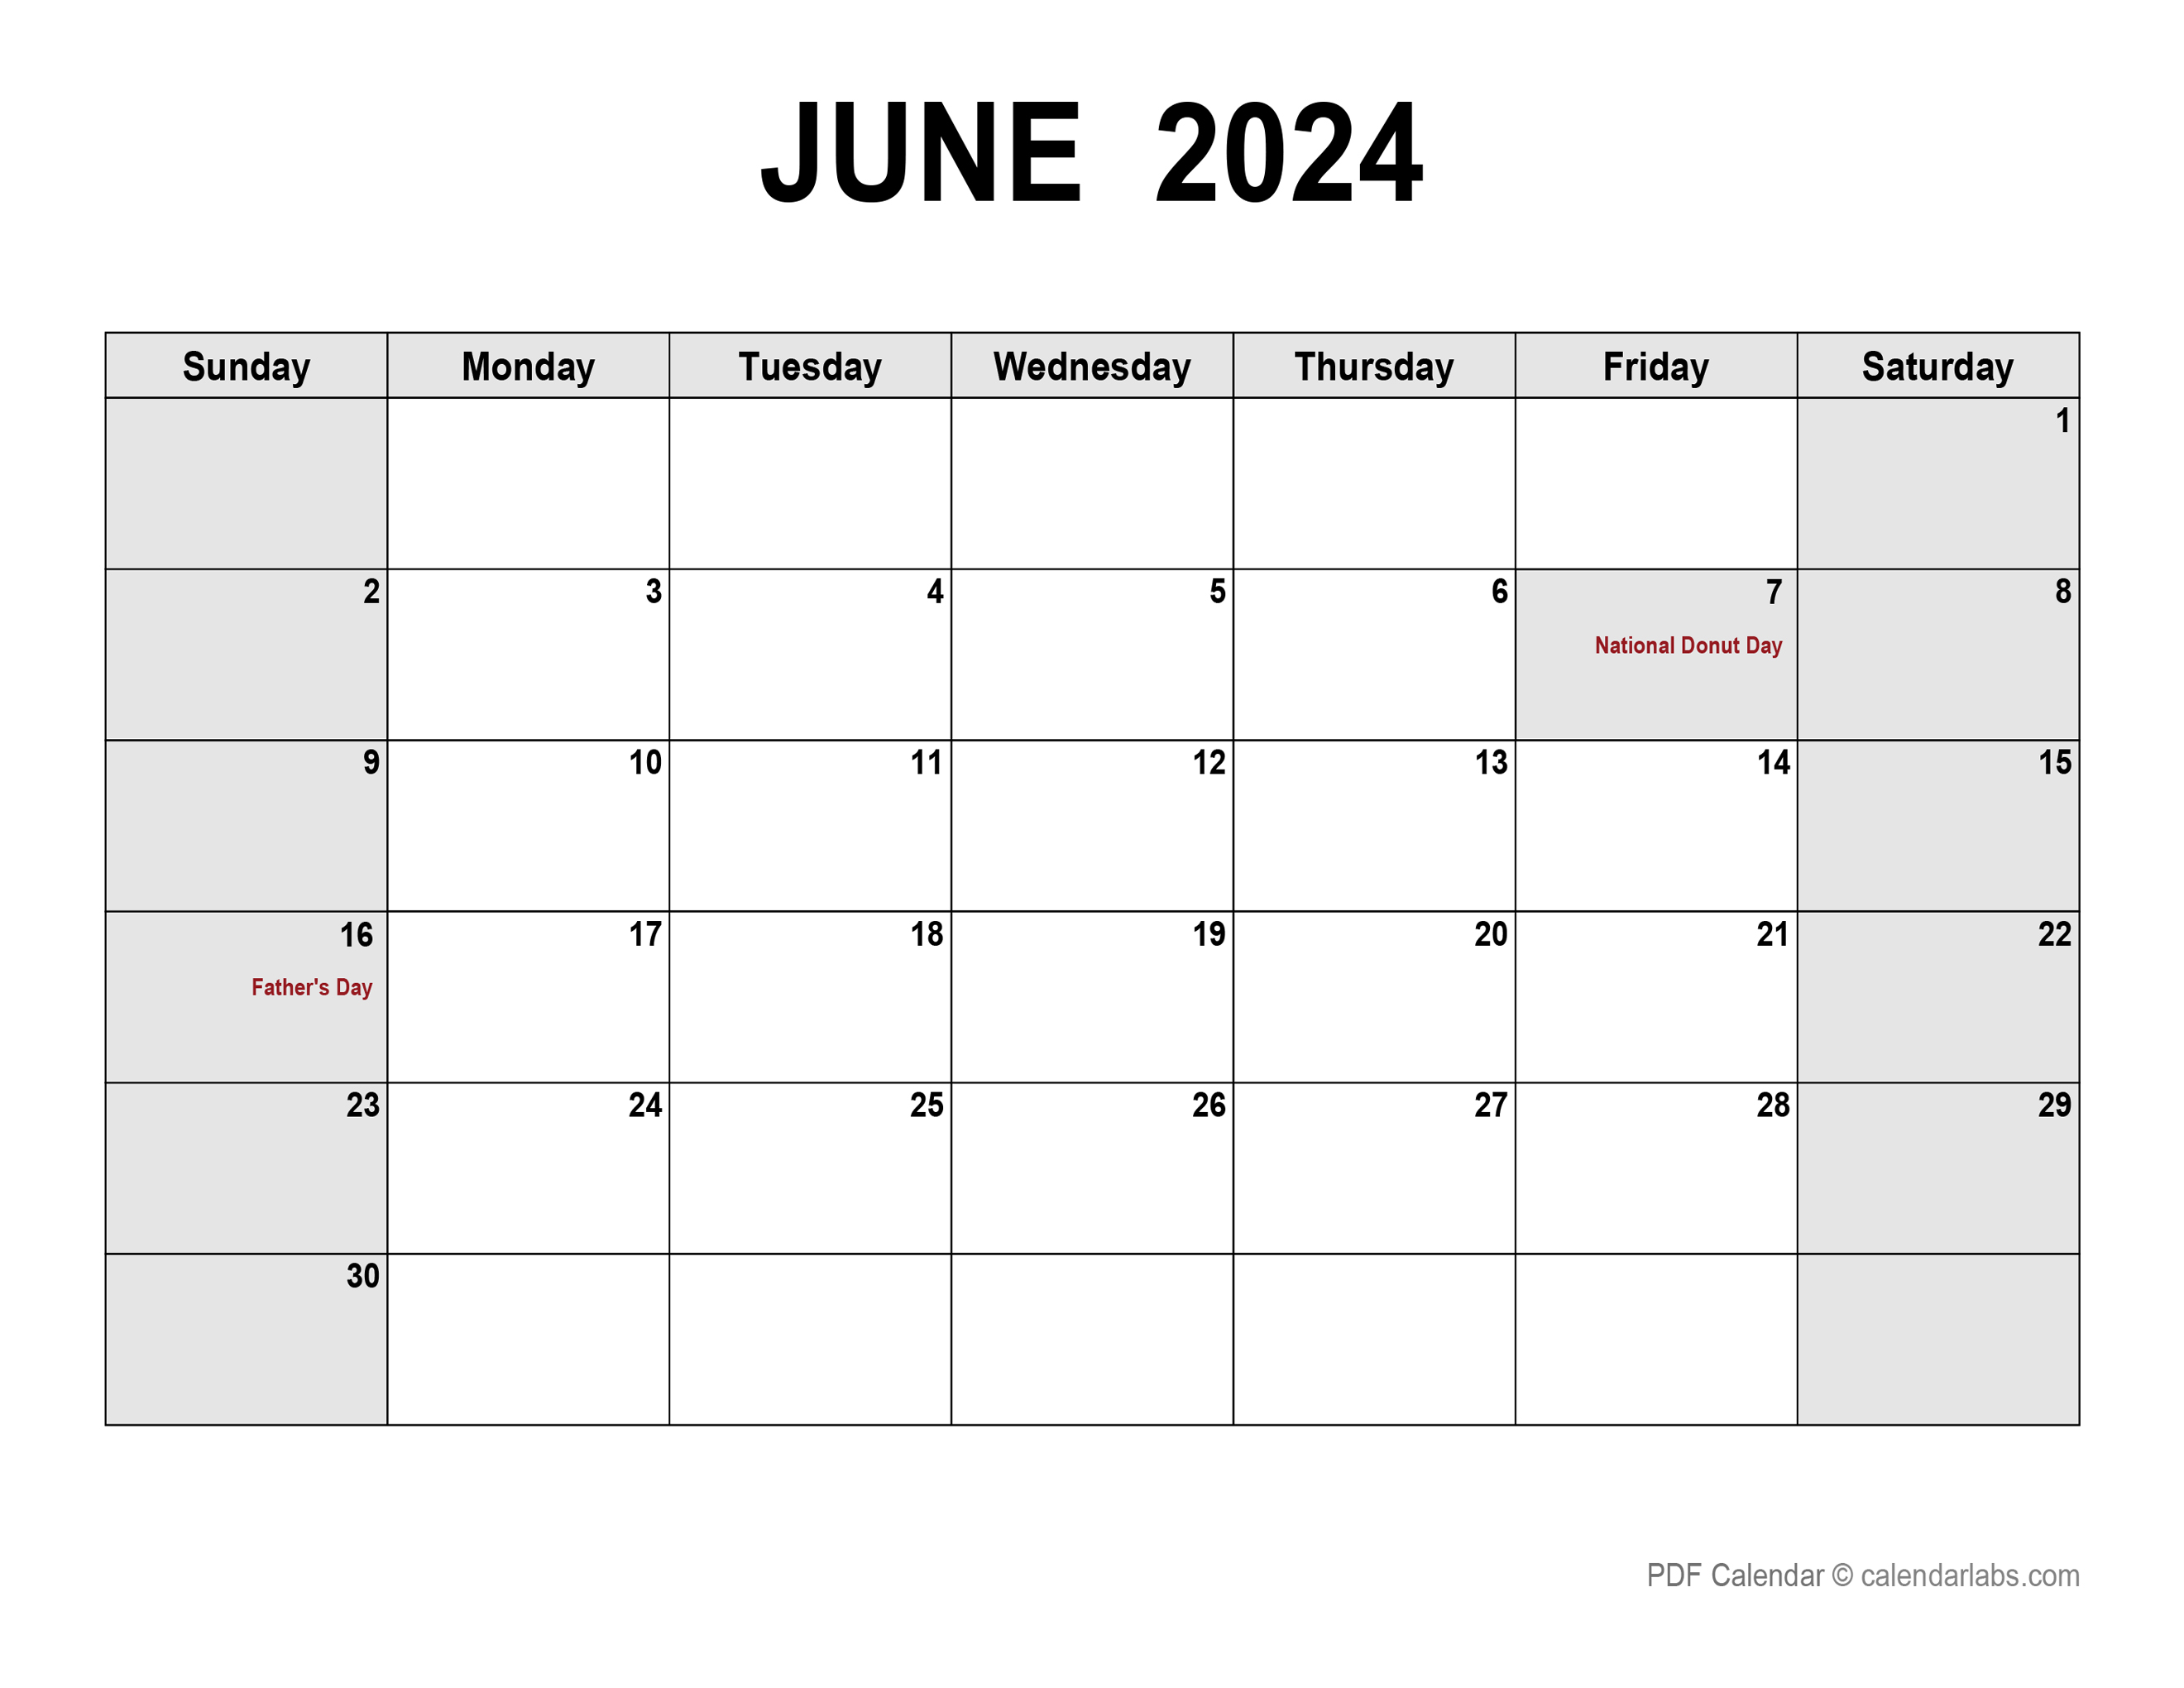 June 2024 Calendar with Holidays CalendarLabs